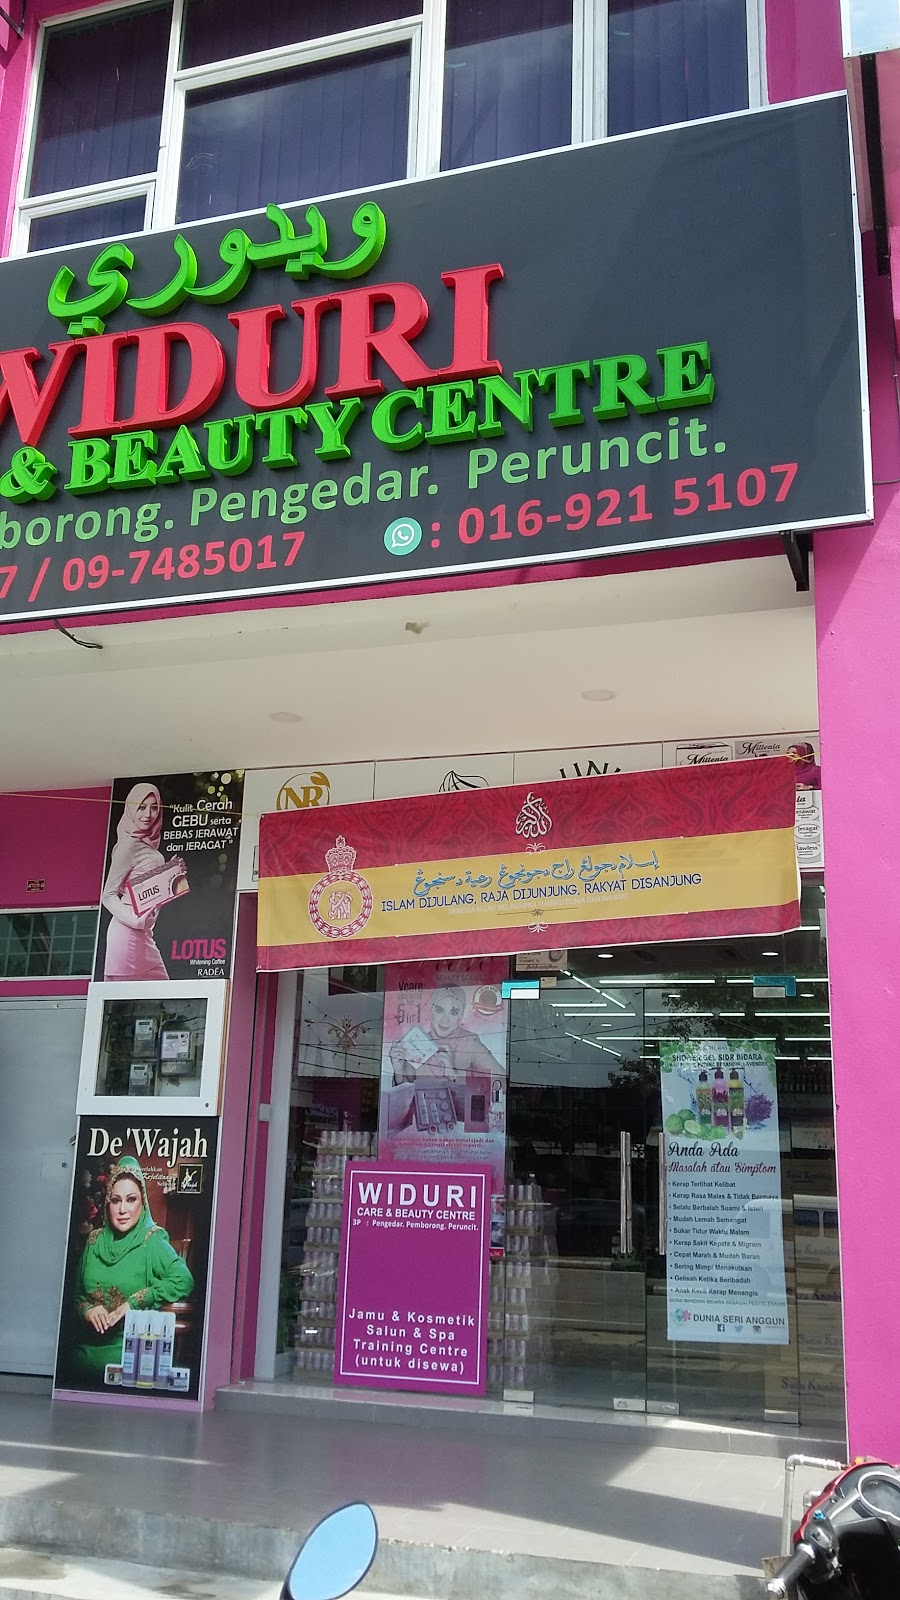 Widuri Herbs & Beauty Centre